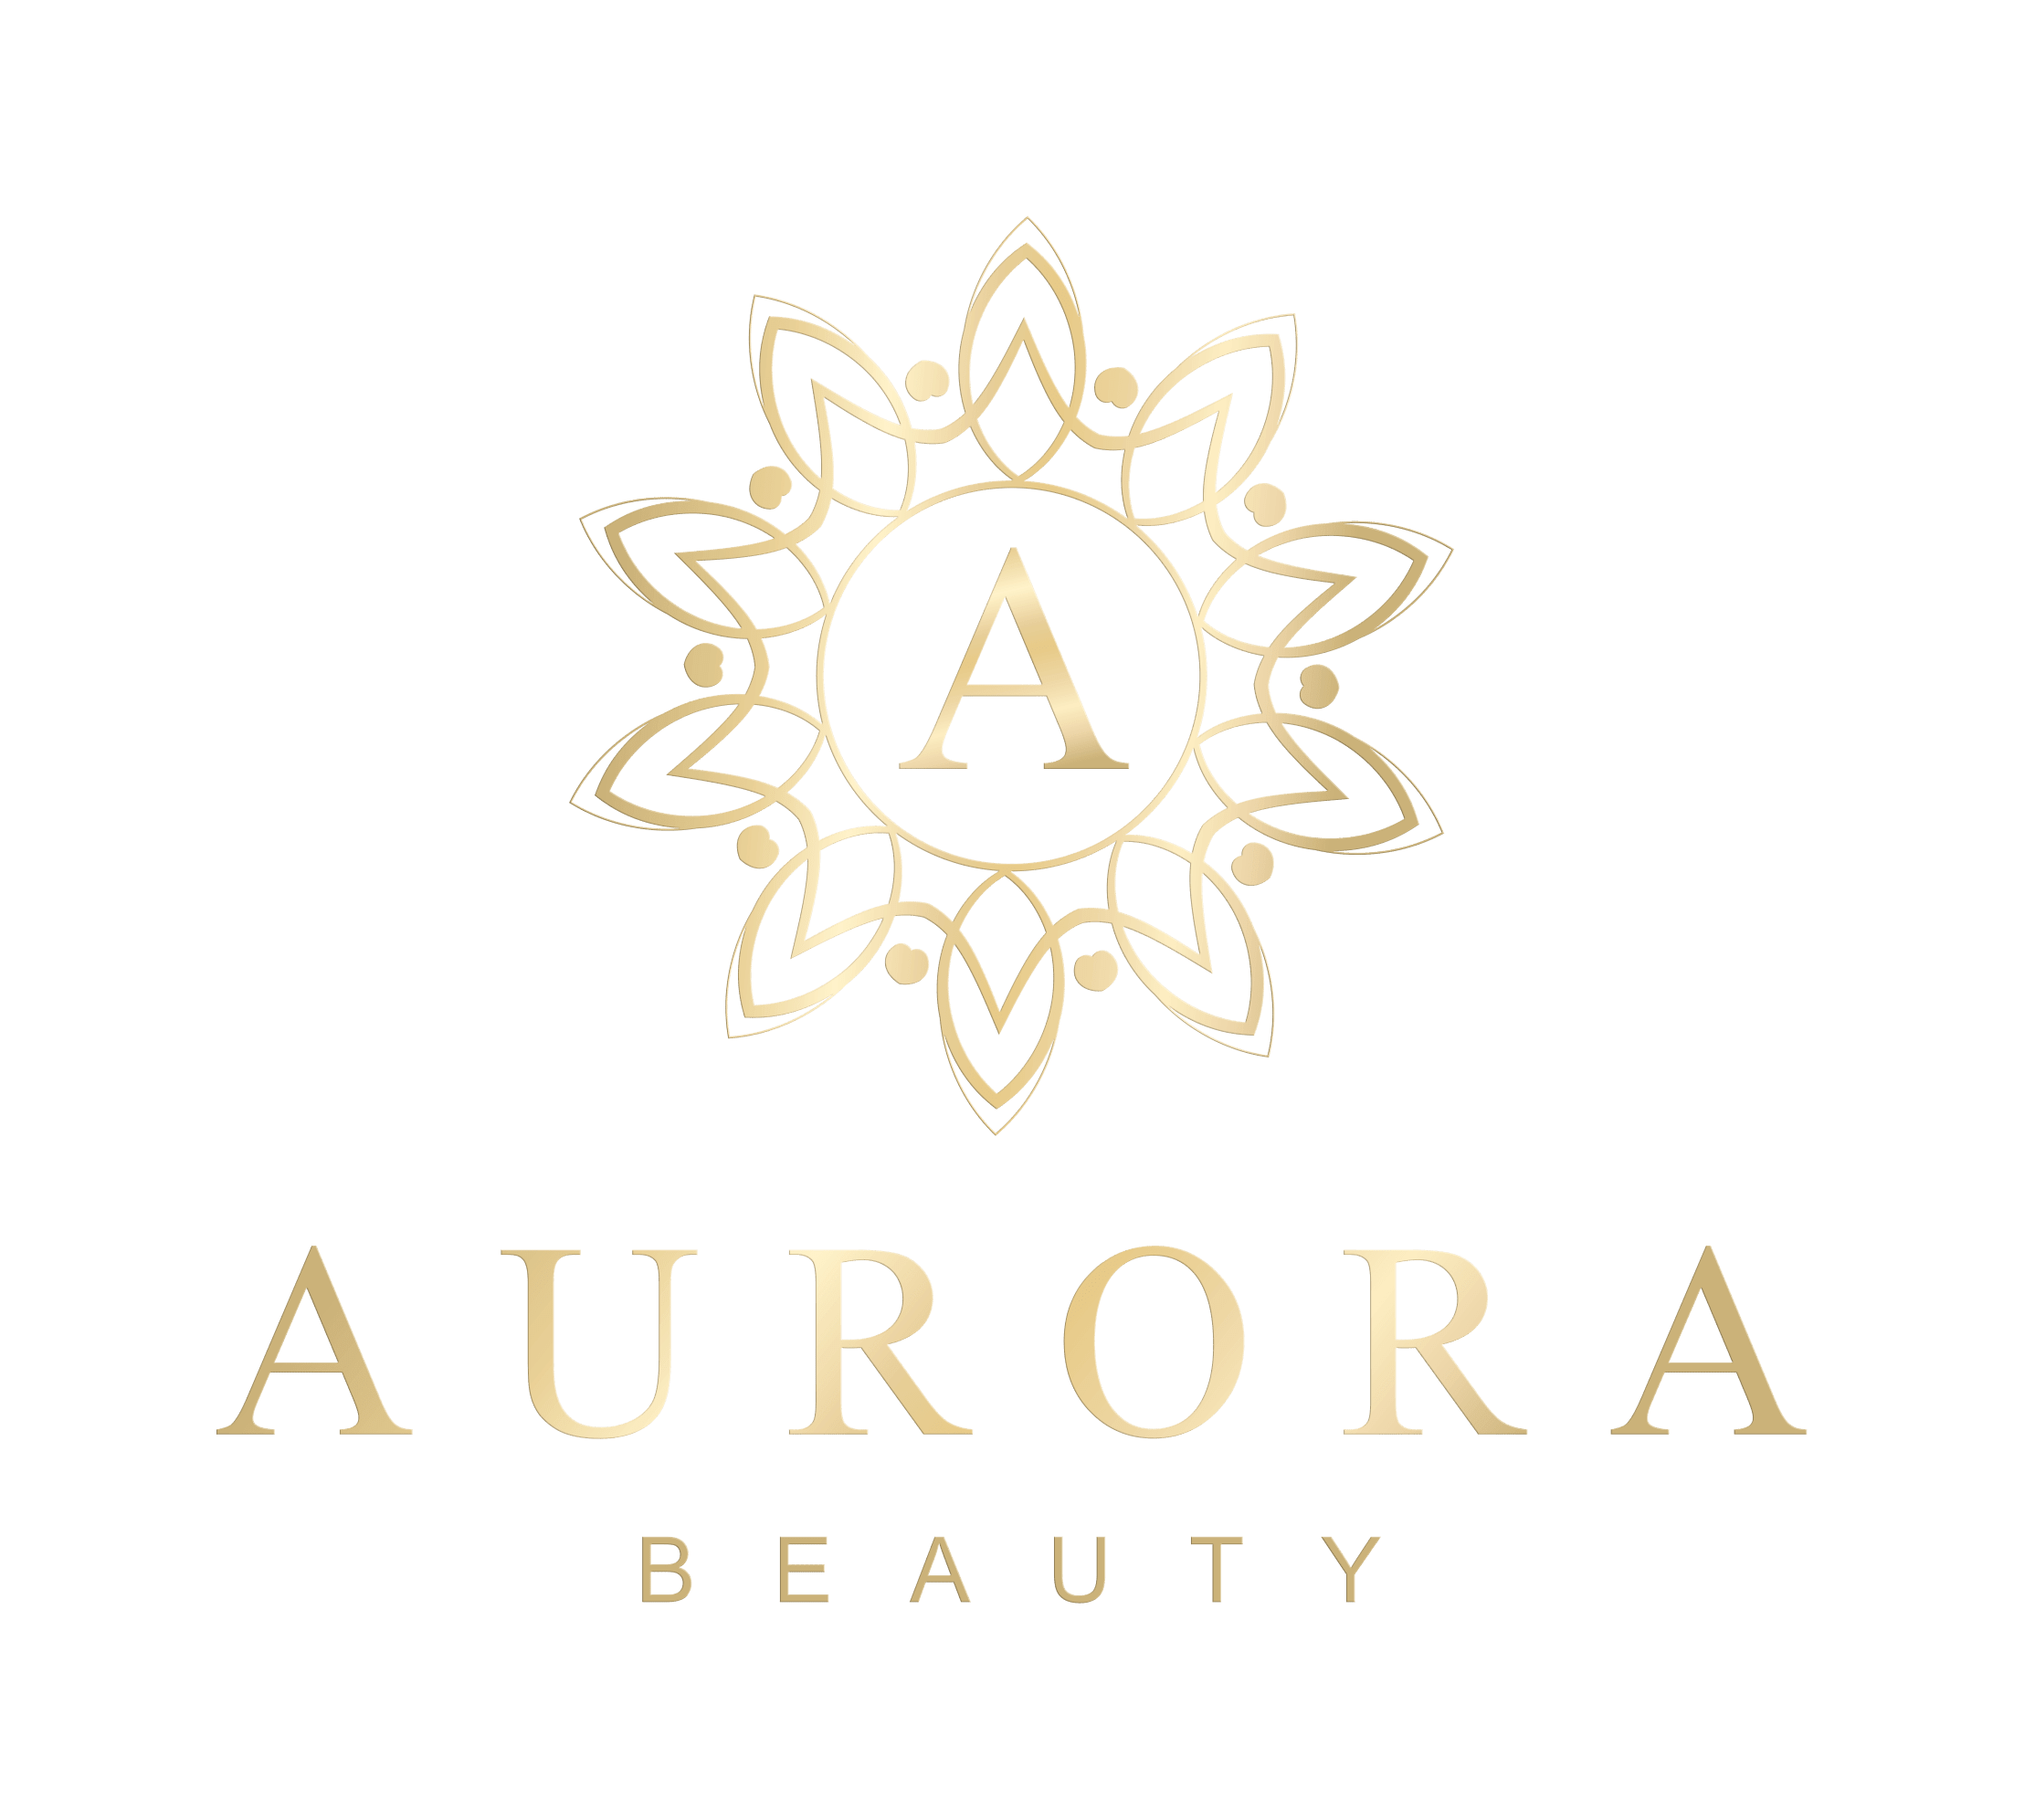 Aurora Beauty and Aesthetics